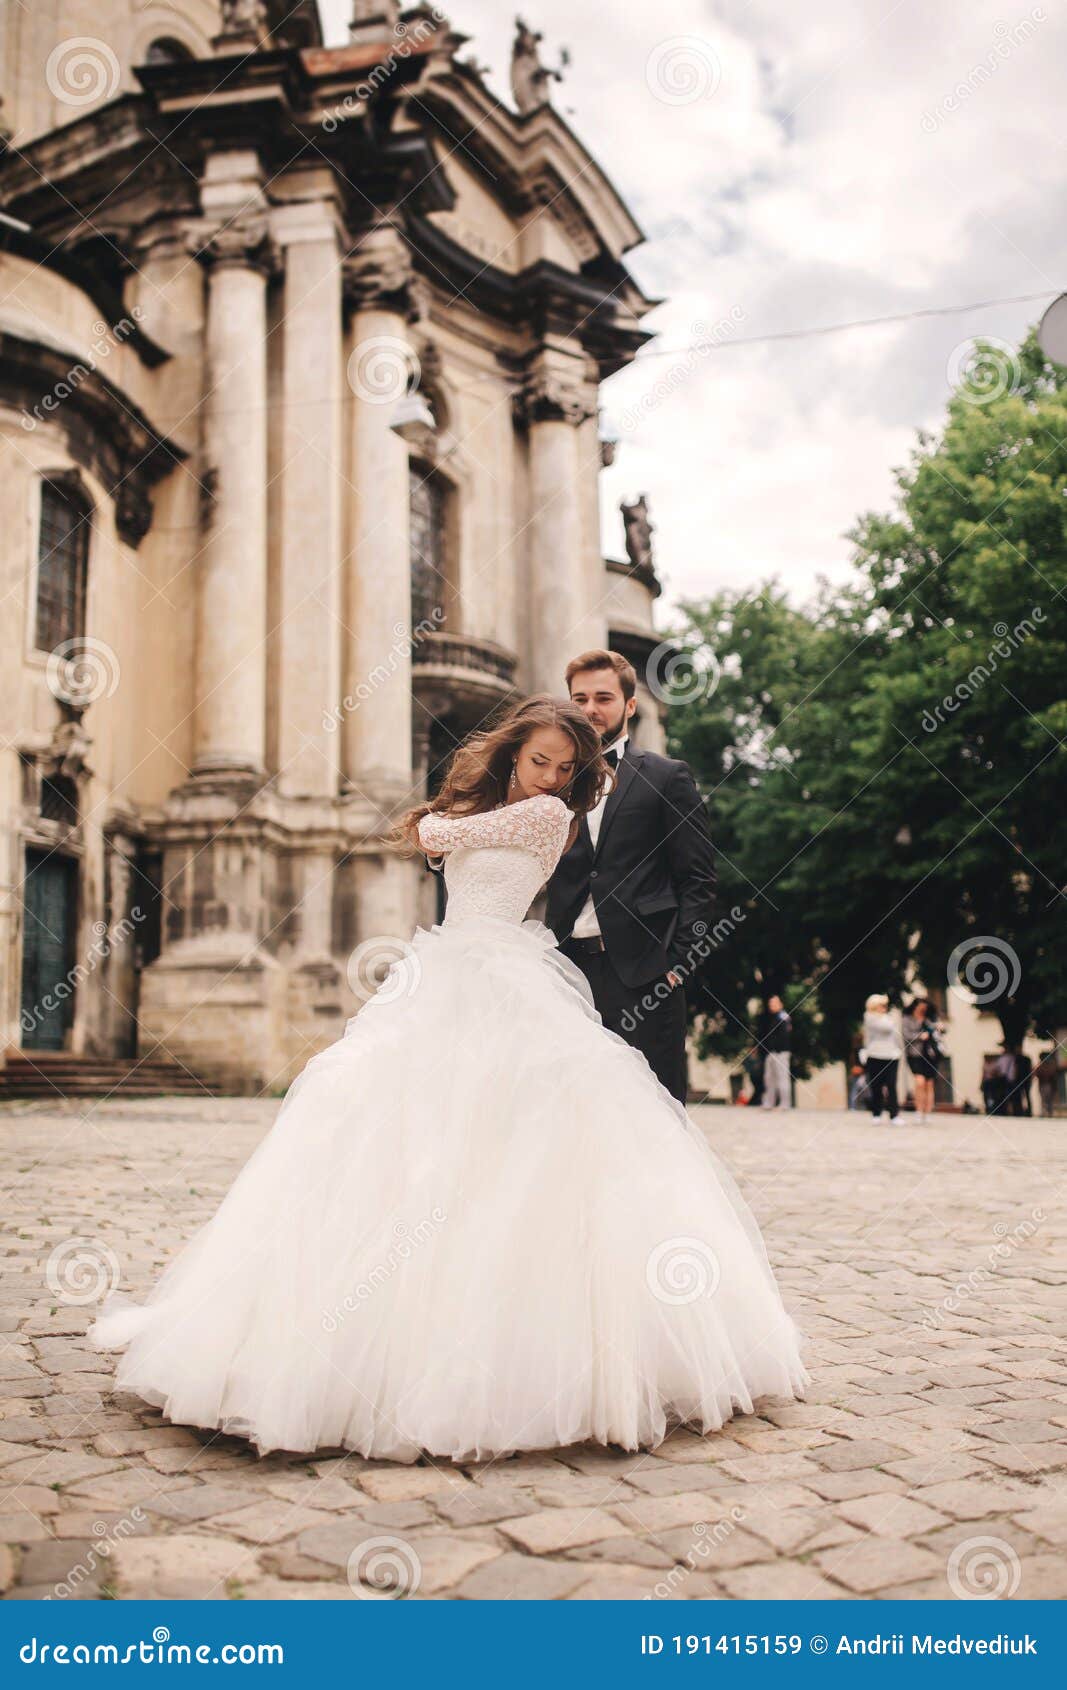 https://thumbs.dreamstime.com/z/stylish-bride-groom-gently-hugging-european-city-street-gorgeous-wedding-couple-newlyweds-embracing-near-ancient-191415159.jpg